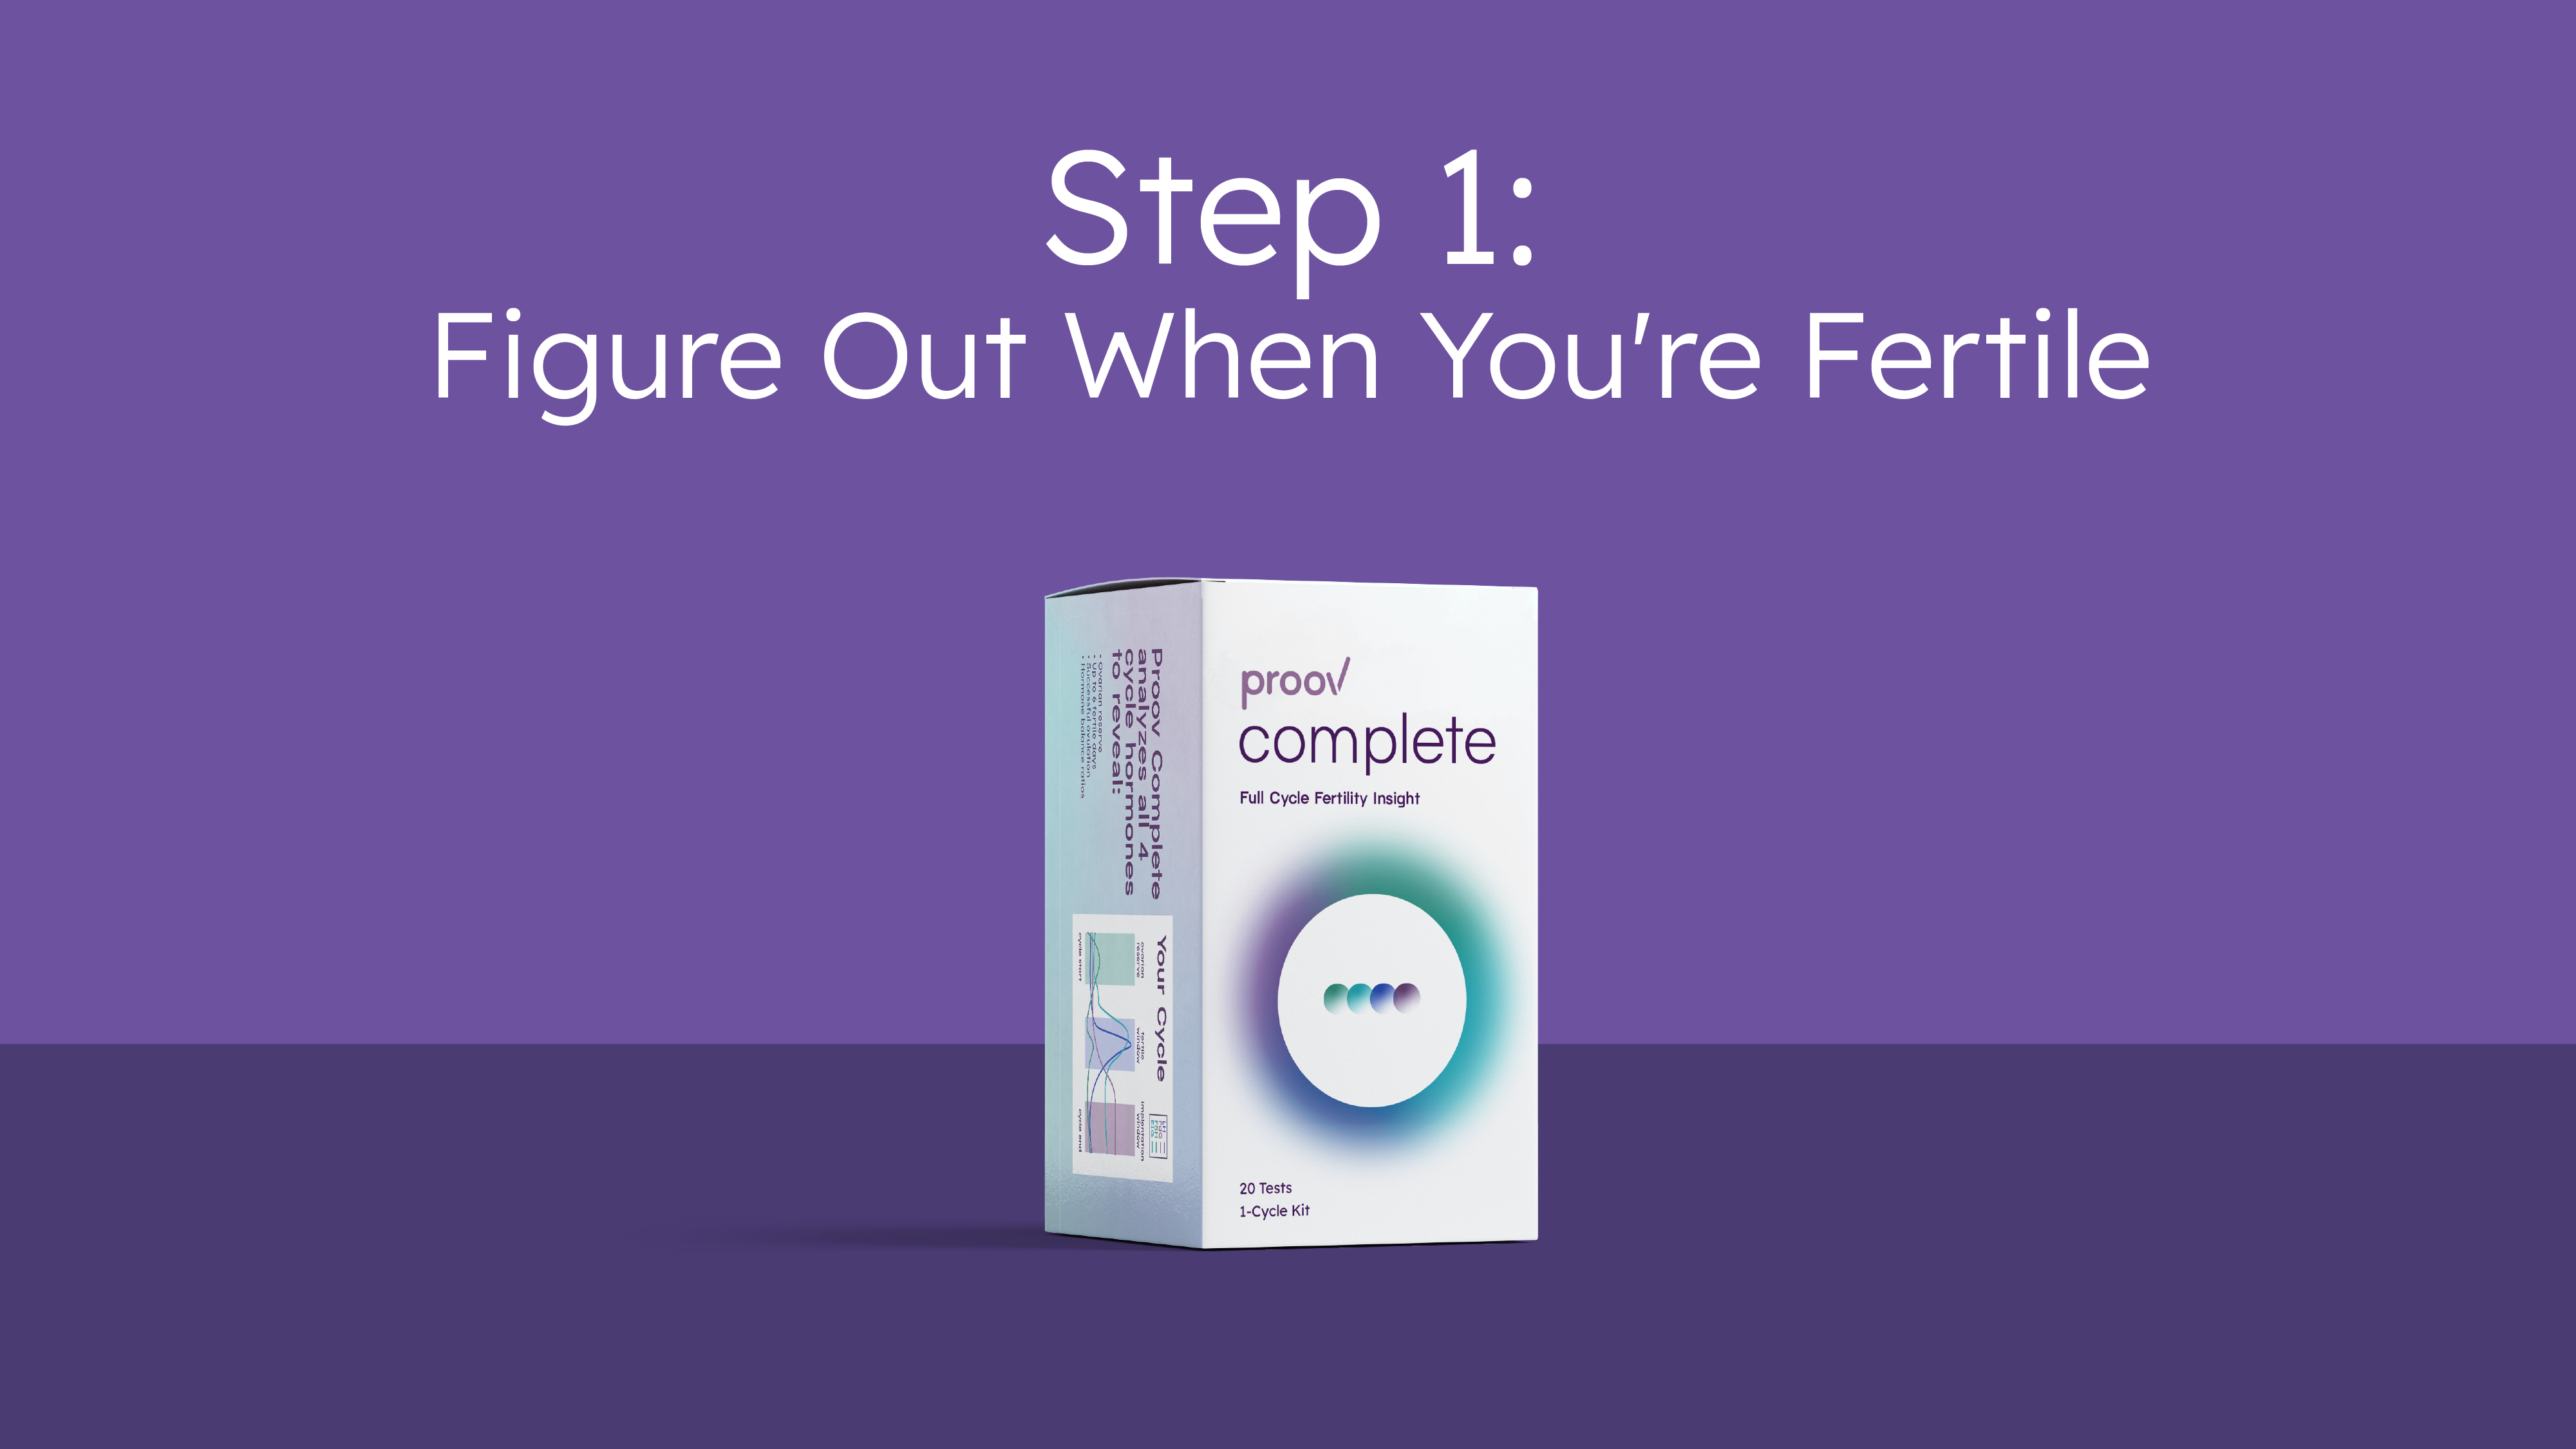 your fertility checklist